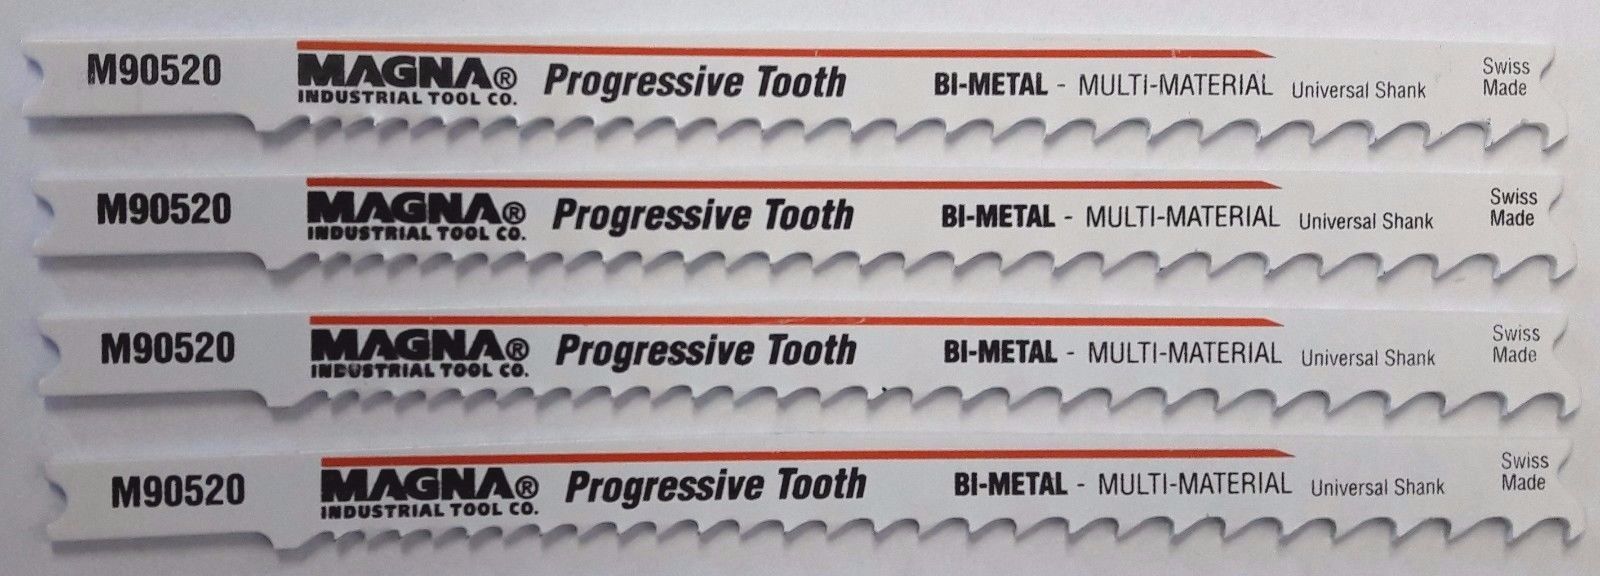 Magna M90526 5" Bi-Metal Progressive Tooth Jig Saw Blades U-Shank 2-2 Packs